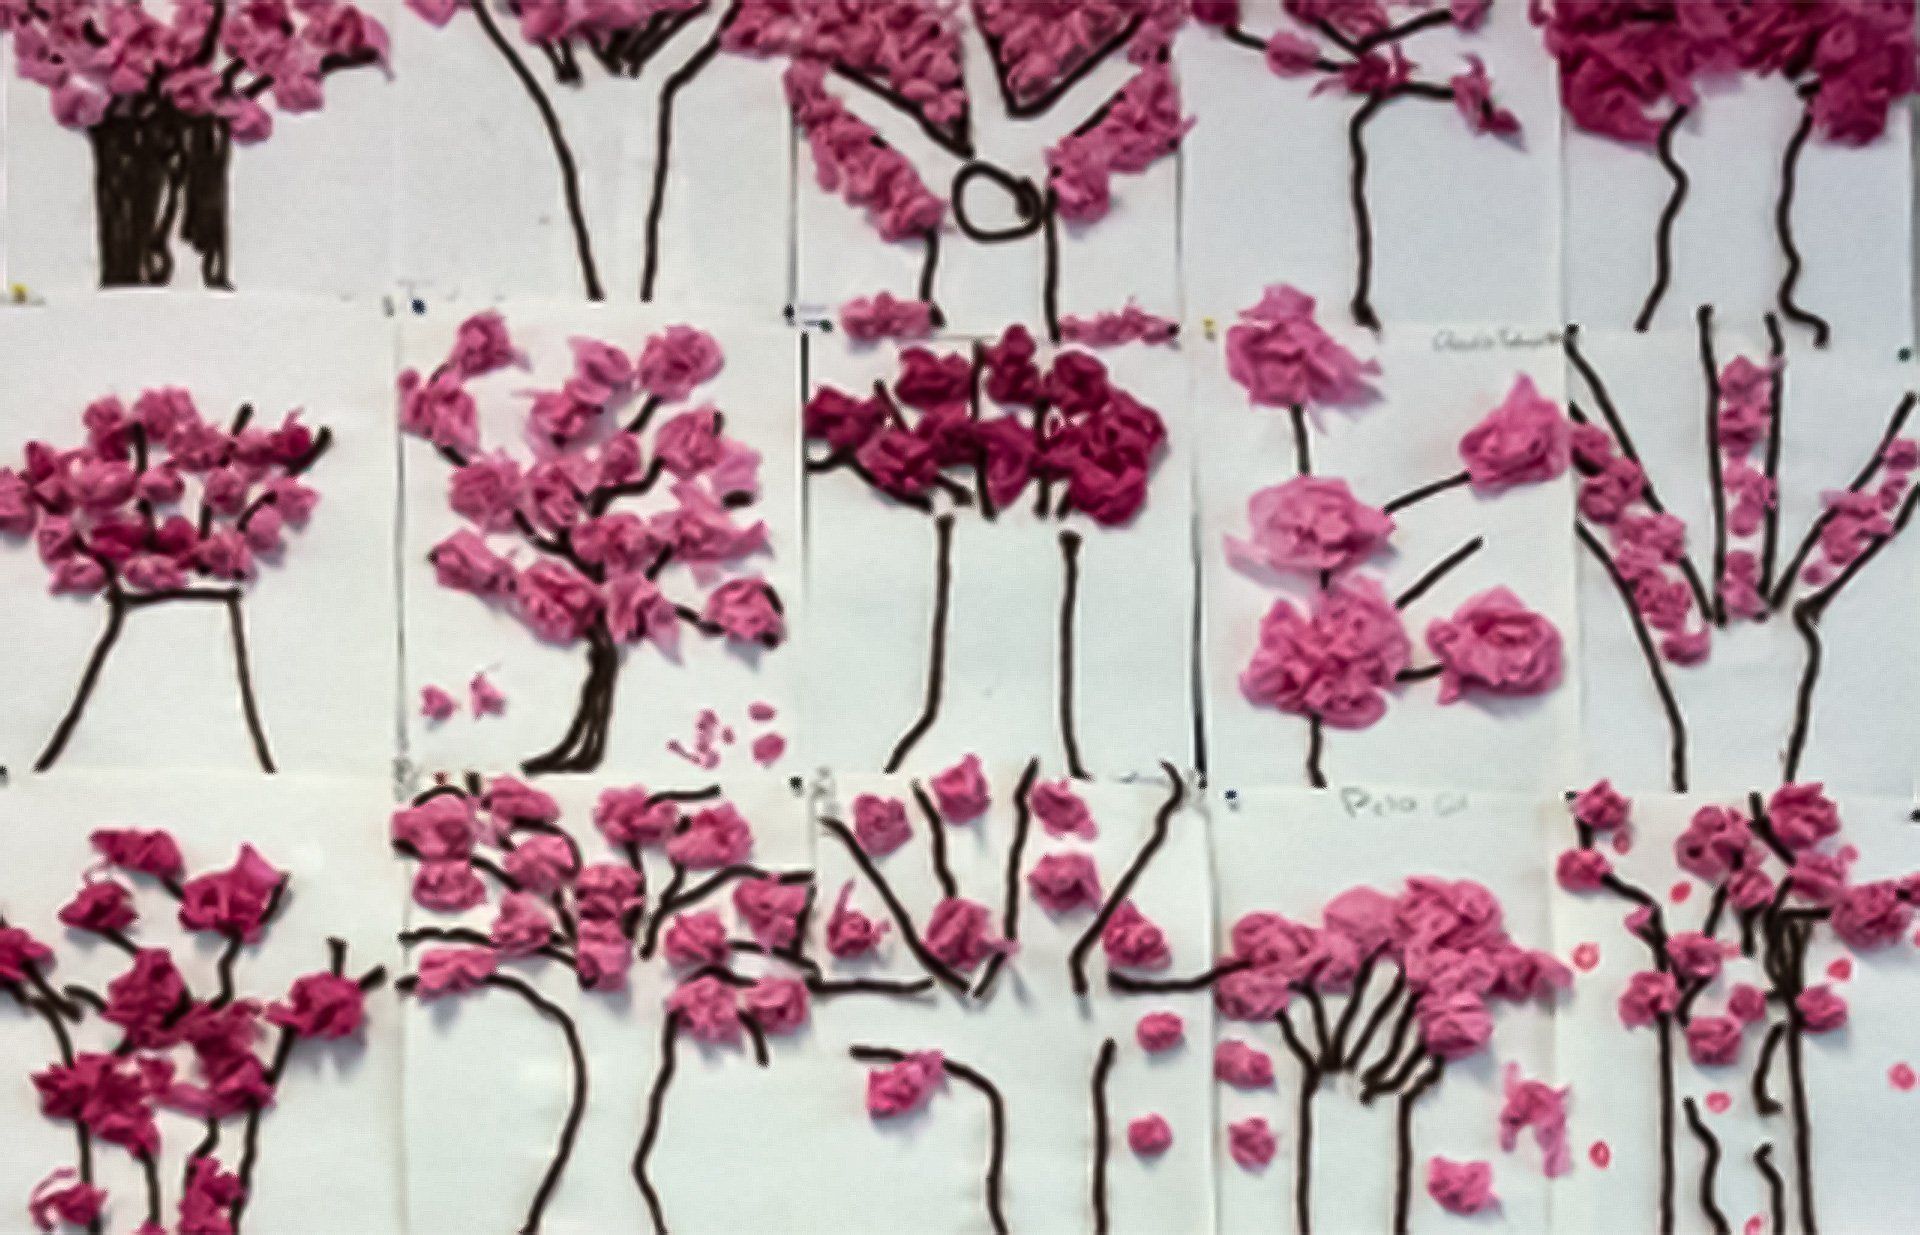 Cherry Blossom collage lesson